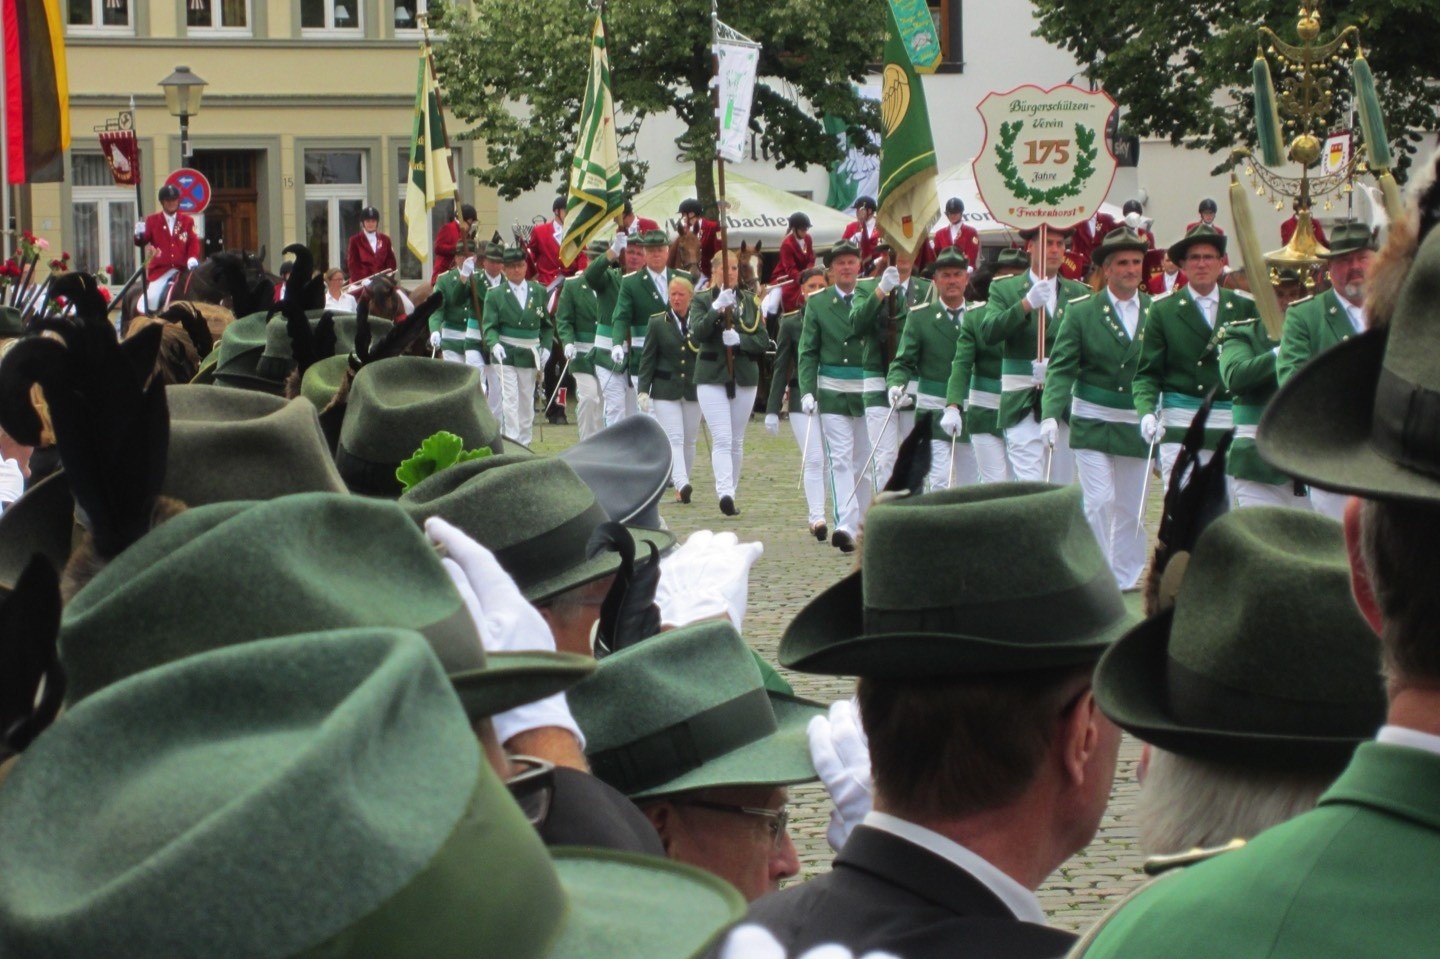 Bürgerschützenverein Freckenhorst,Schützenfest,Freckenhorst,musikalischen Schützen-Frühschoppen,